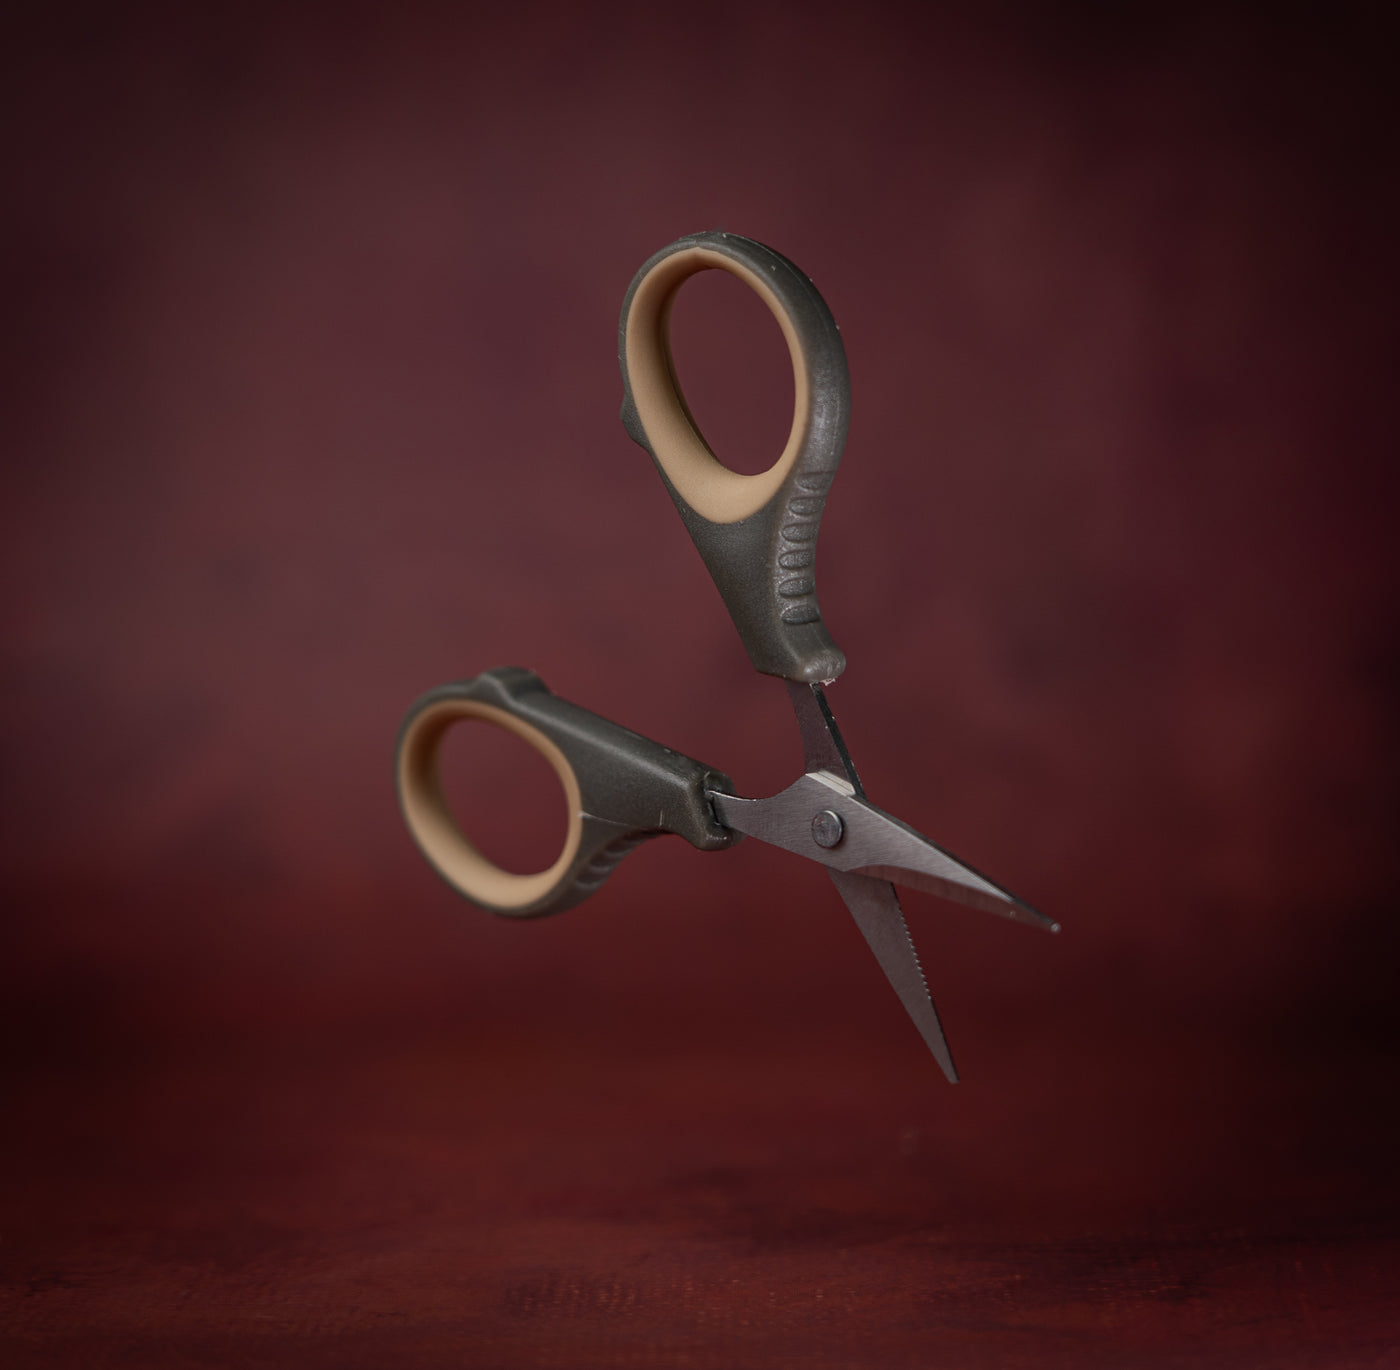 Mazuzee Braided Line Scissors, MZFTBS01